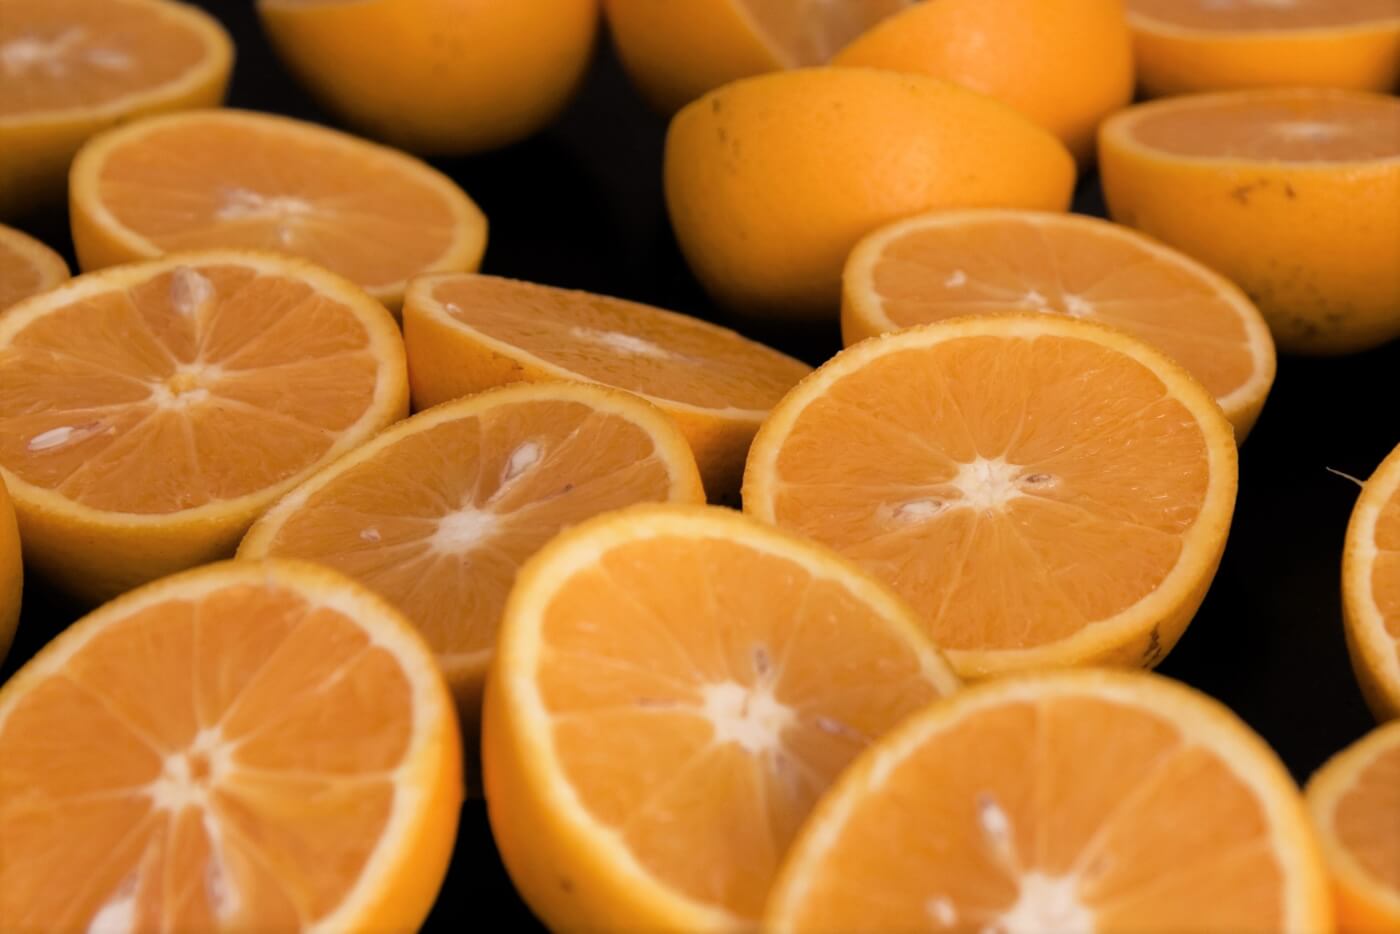 Ensalada de naranja